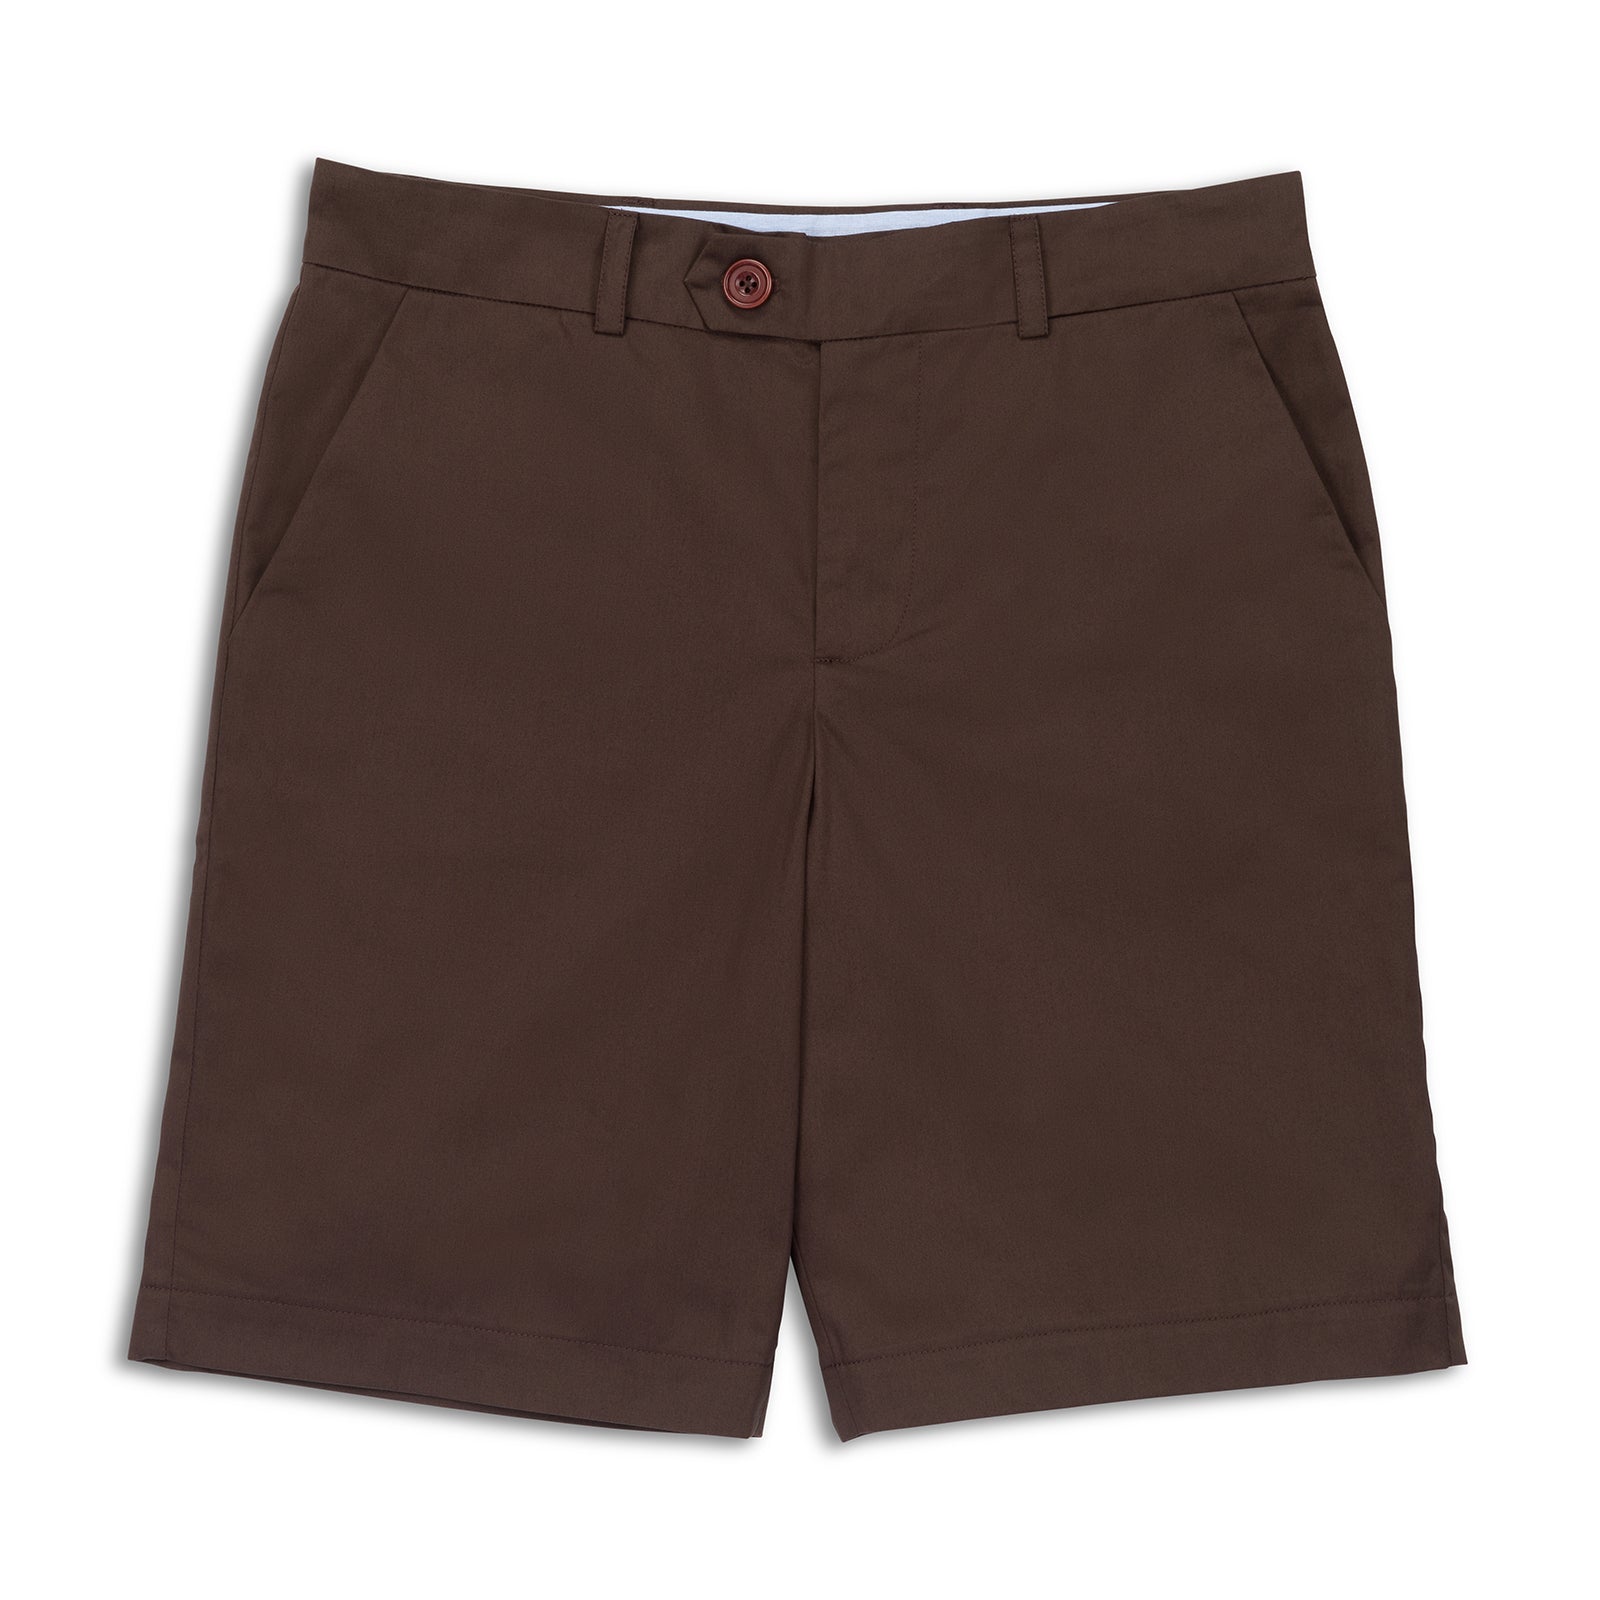 The Merchant Fox Cotton Shorts in Brown